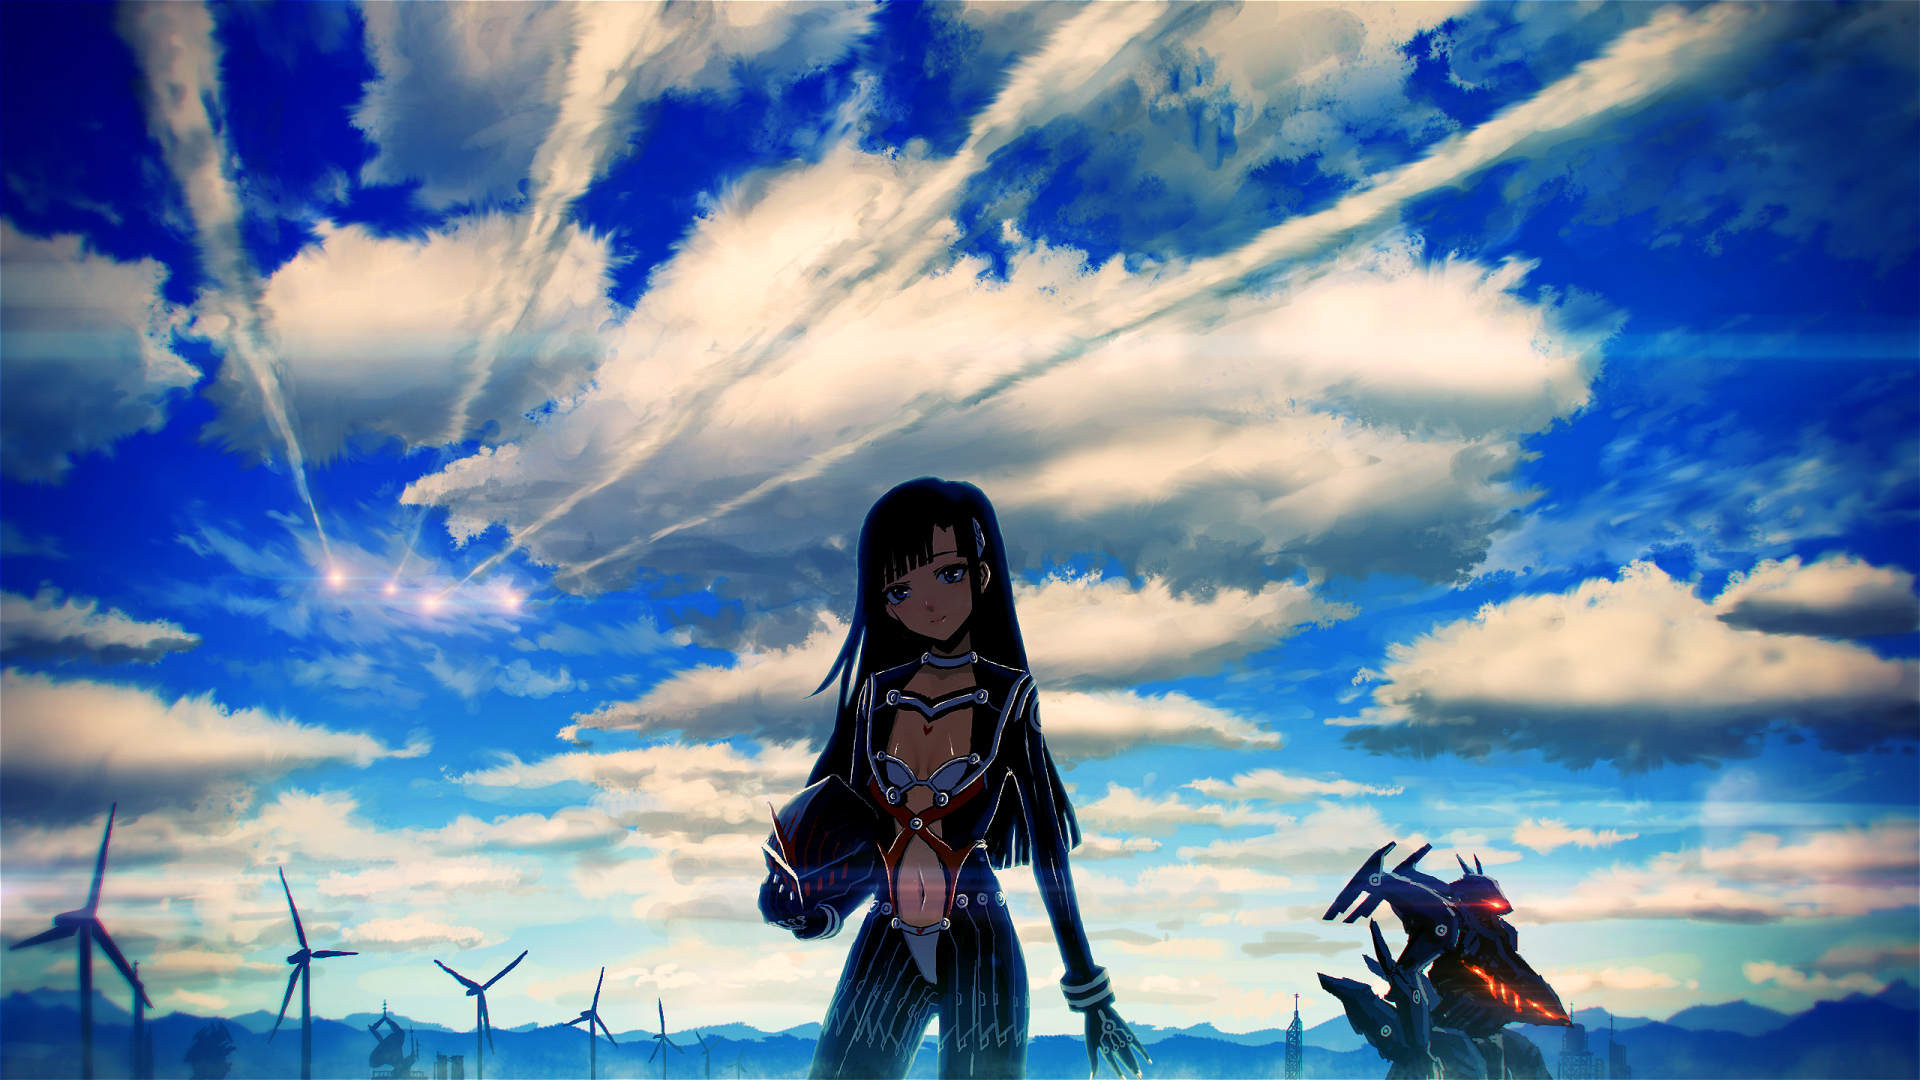 anime, original, futuristic, sky, wind turbine